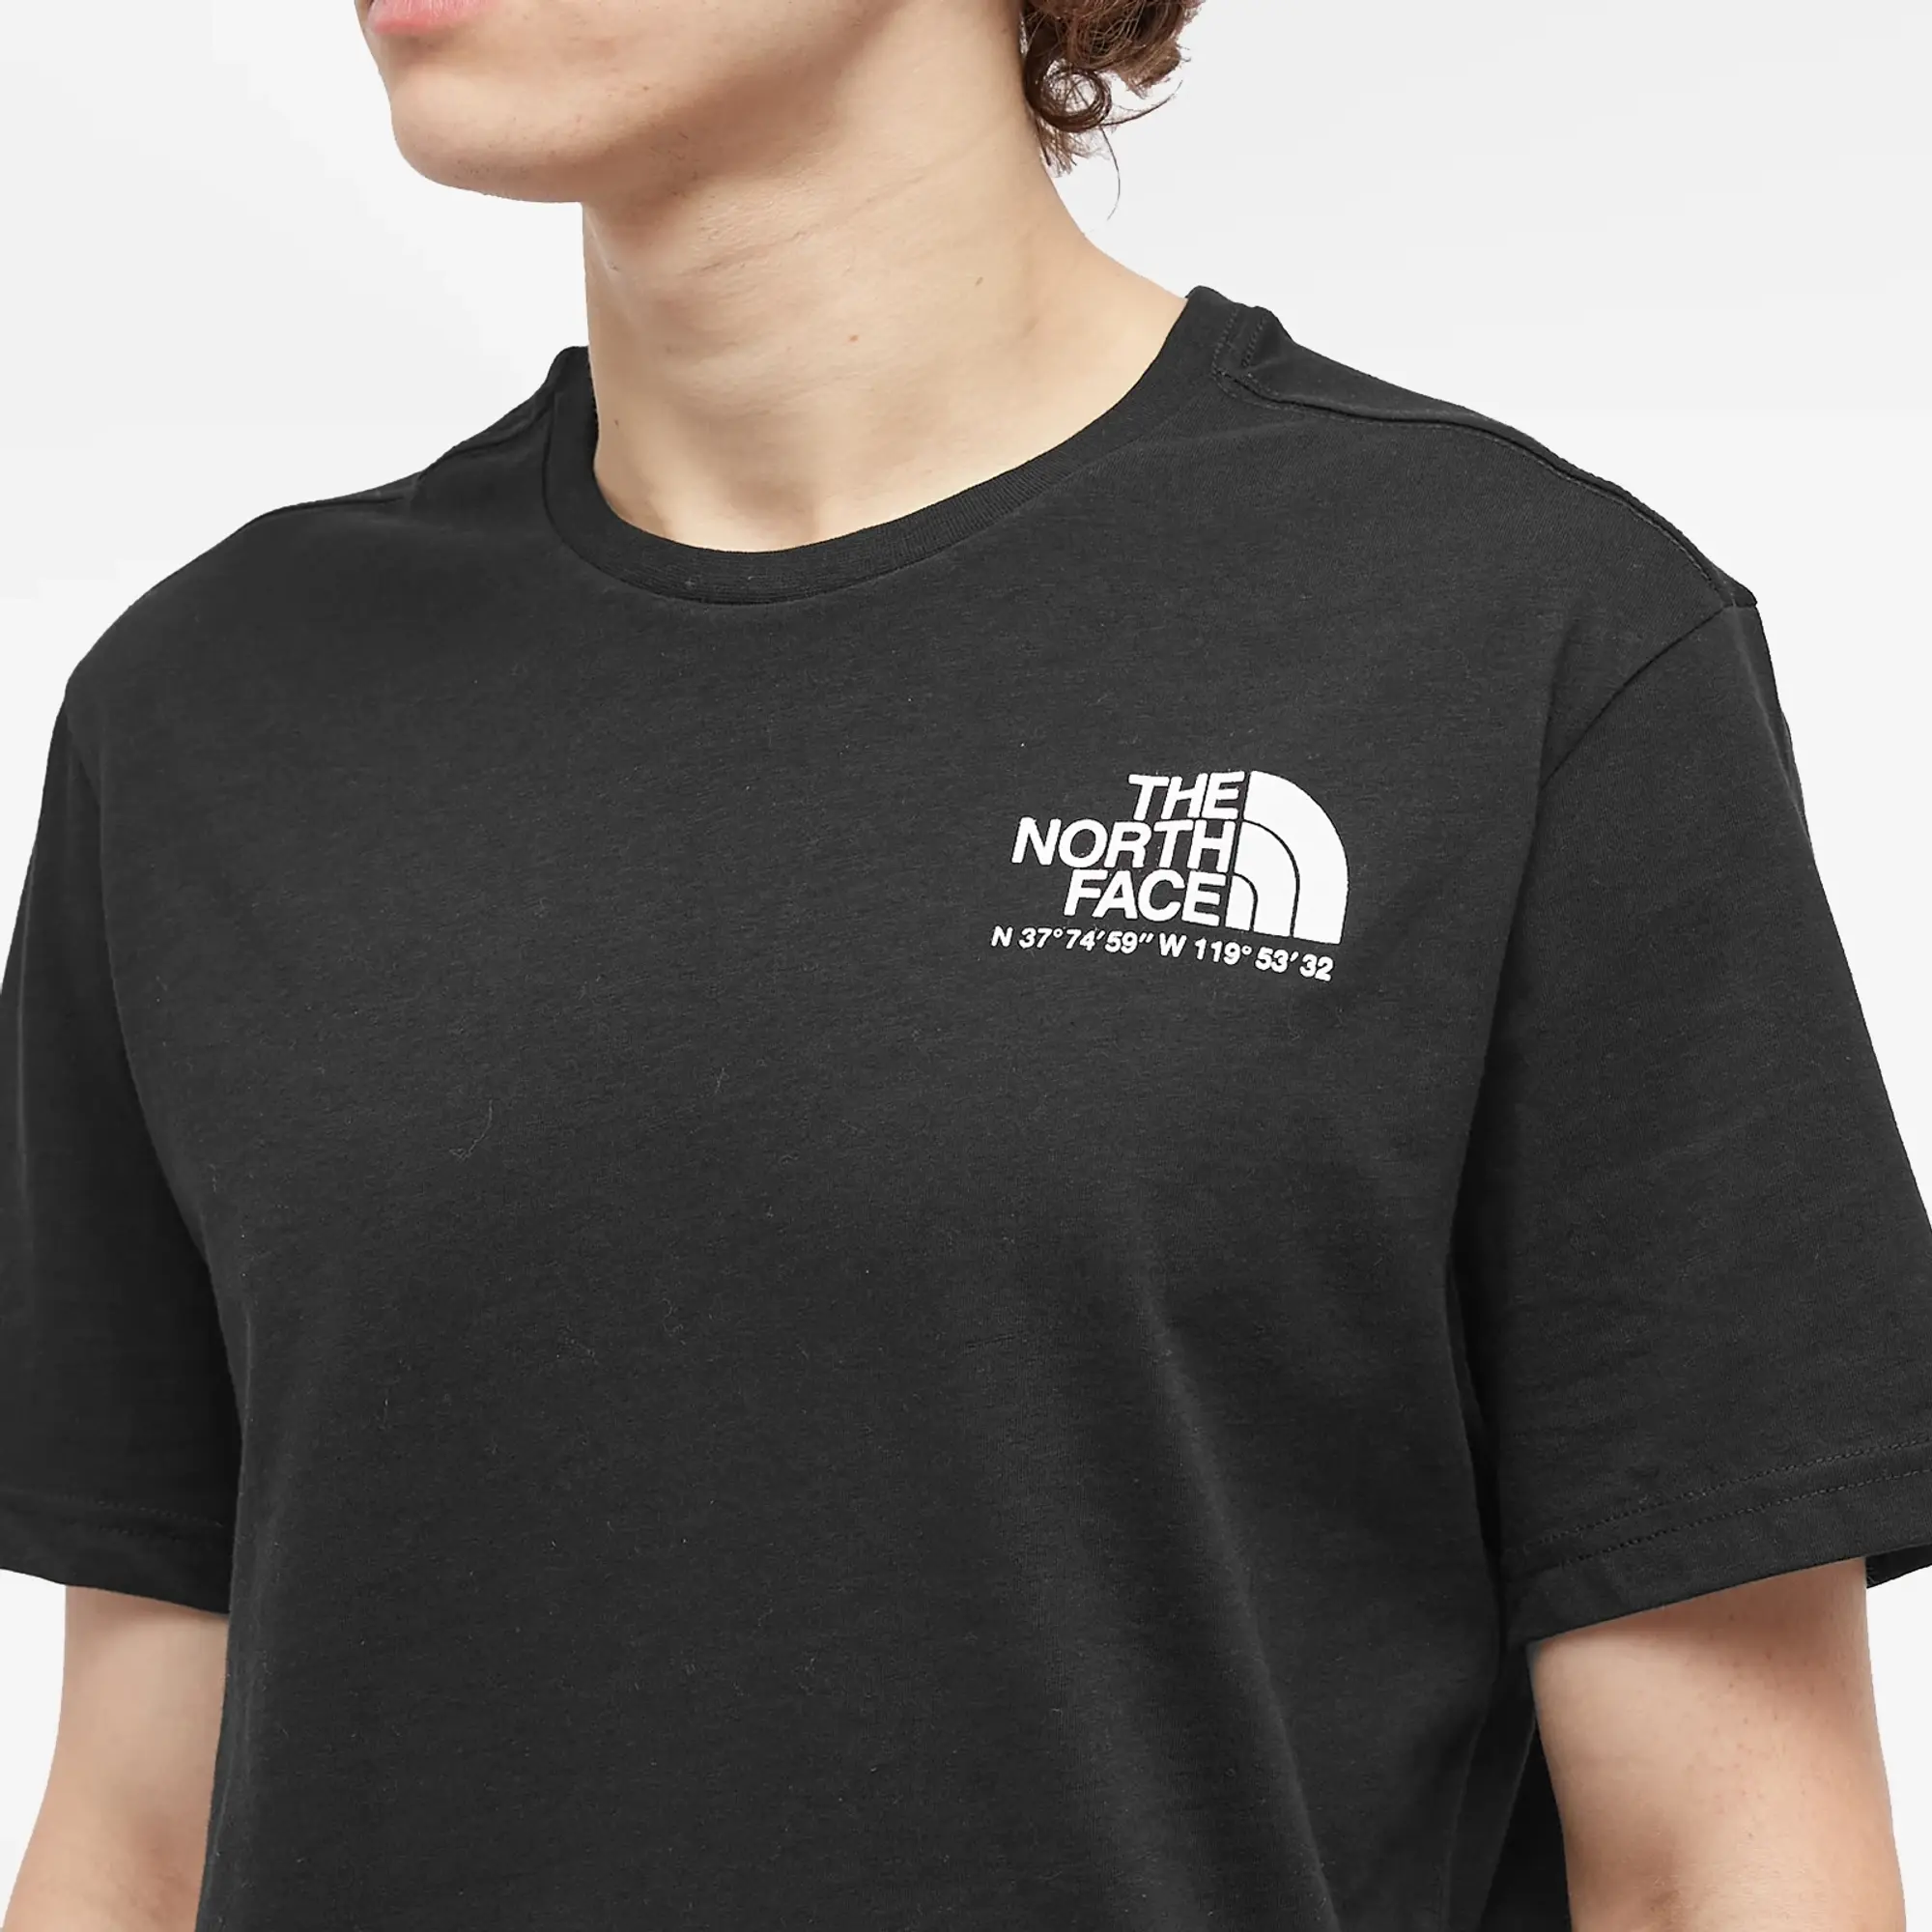 The North Face Coordinates T-Shirt, Black